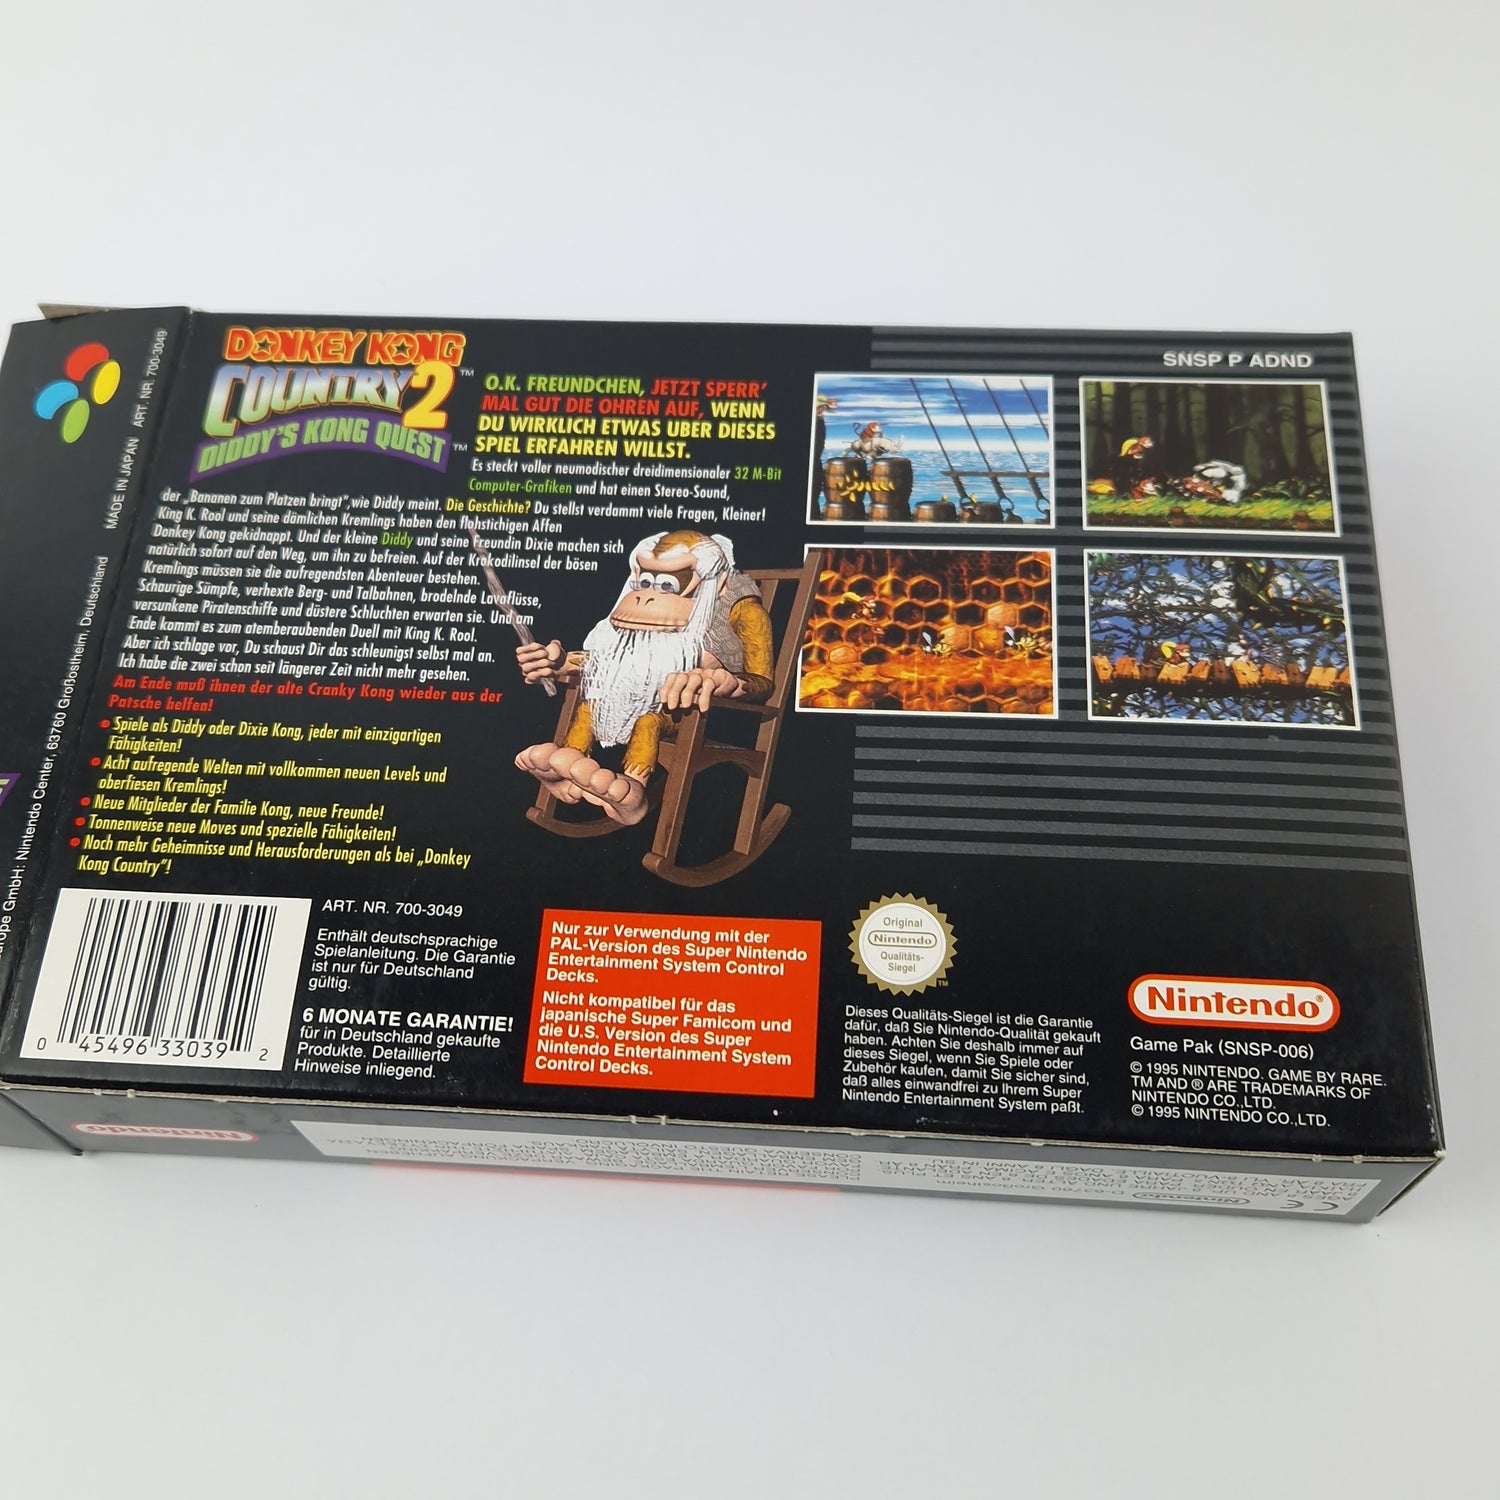 Super Nintendo Spiel : Donkey Kong Country 2 - Modul Anleitung OVP cib / SNES